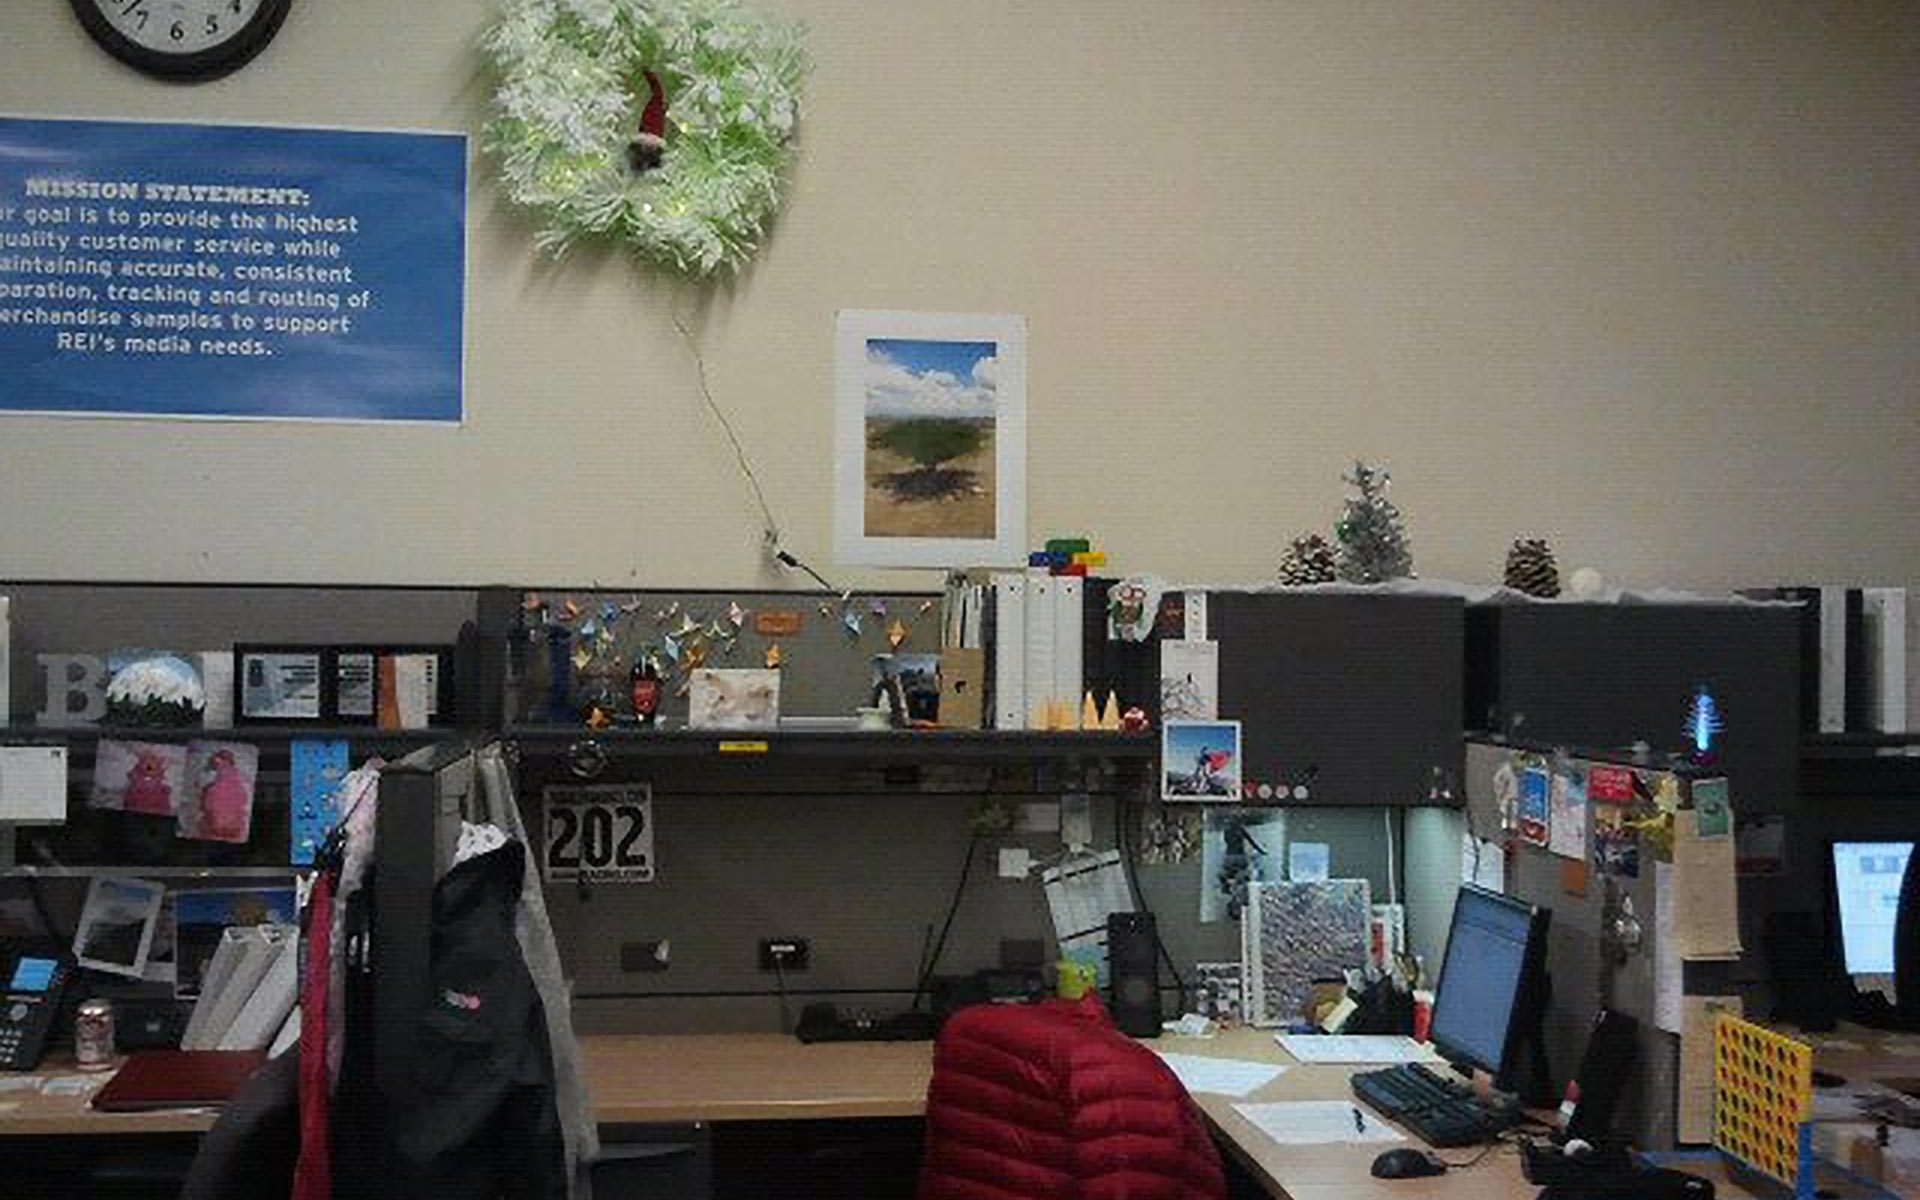 Christmas wreath in an office